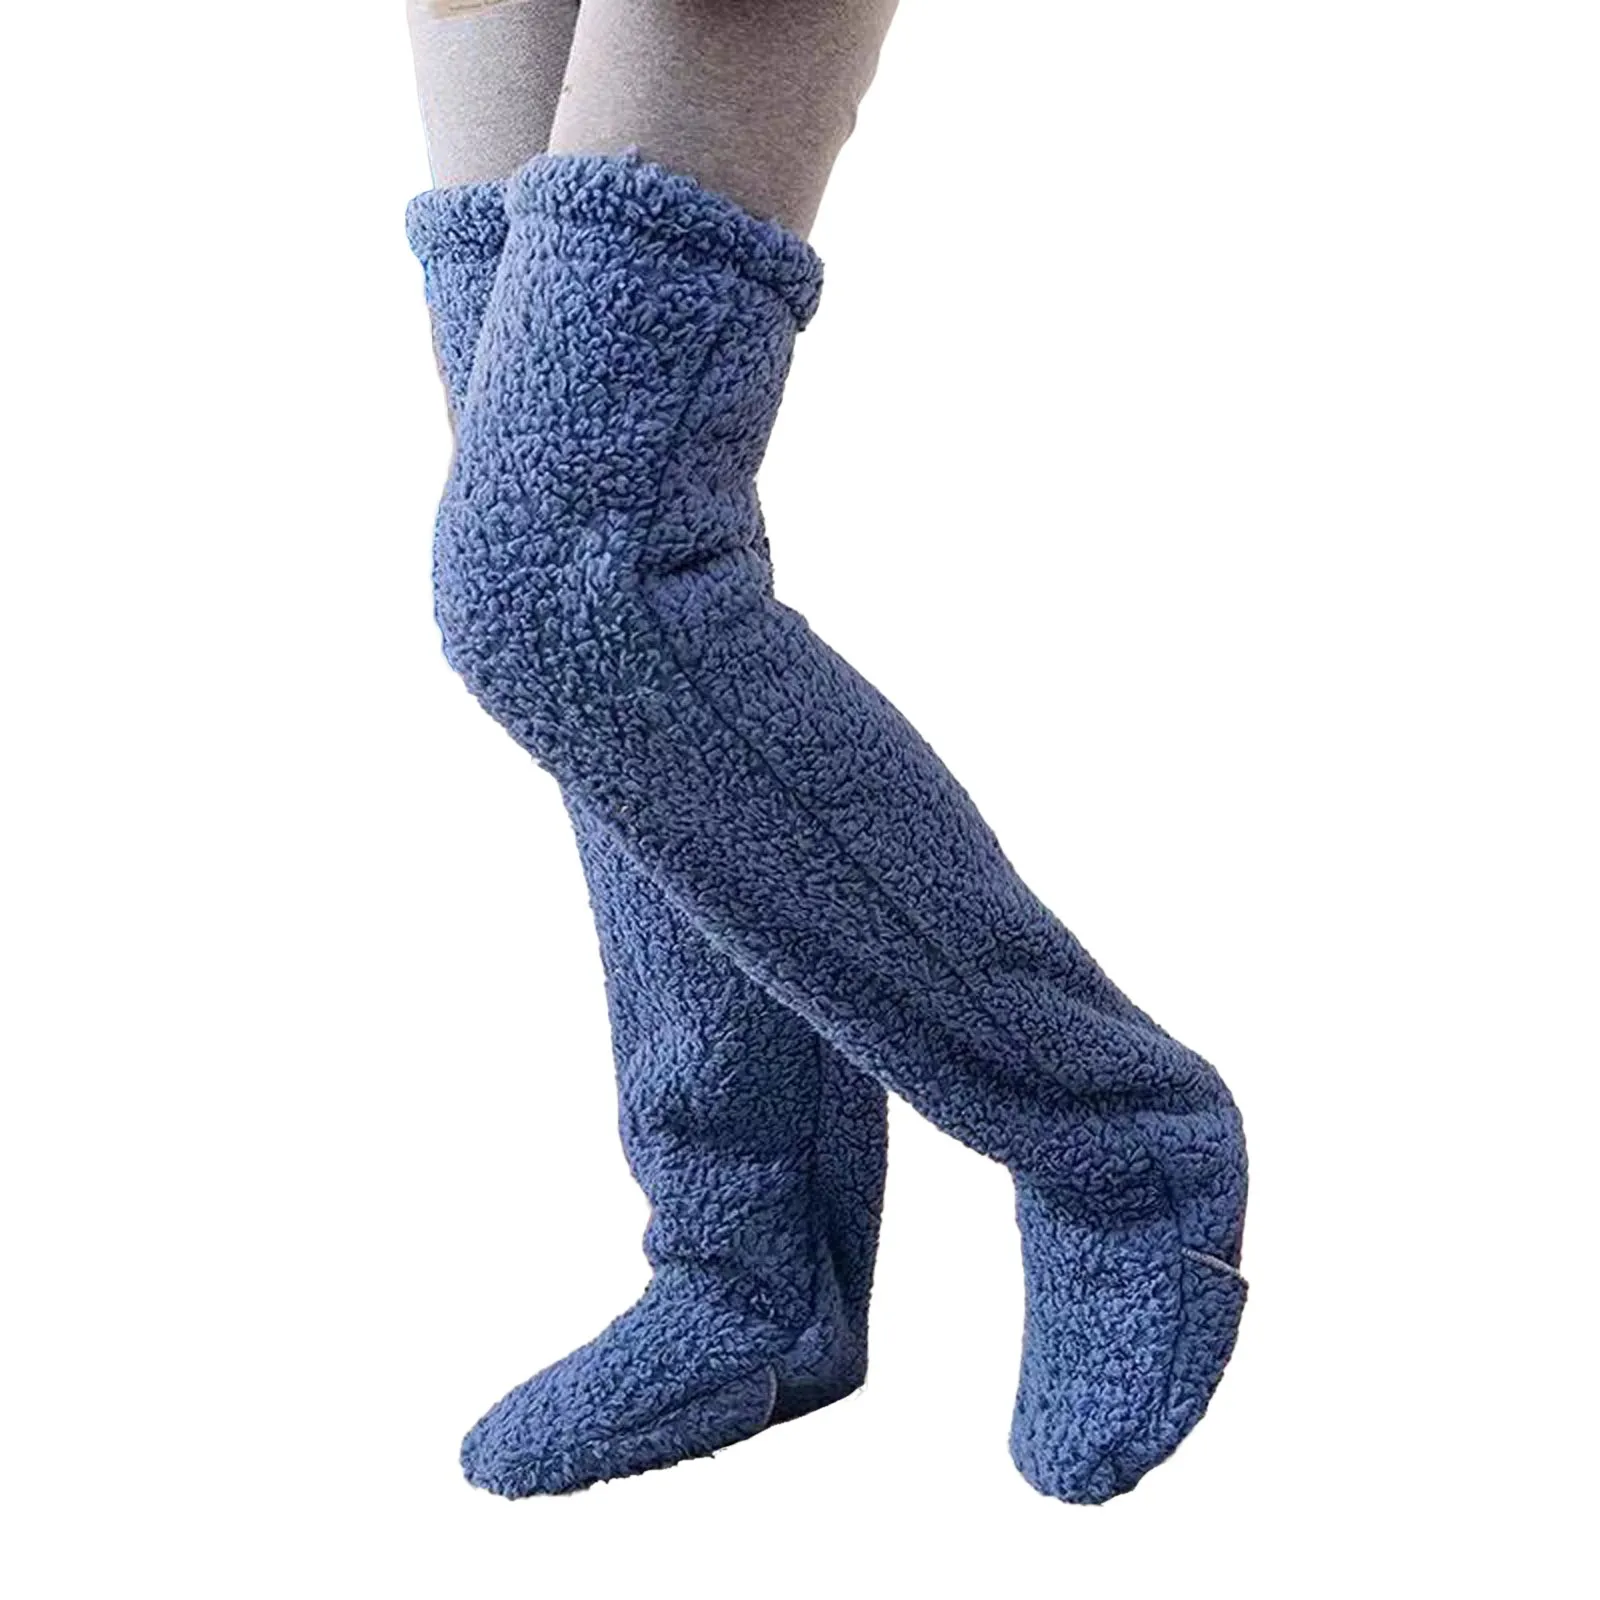 https://ae01.alicdn.com/kf/S5c488b8631d346dda24d1810c95269deP/Fluffy-Leg-Warmers-Stocking-Winter-Warm-Leg-Cover-Home-Over-Knee-Socks-Thick-Woolen-Pants-Leg.jpg